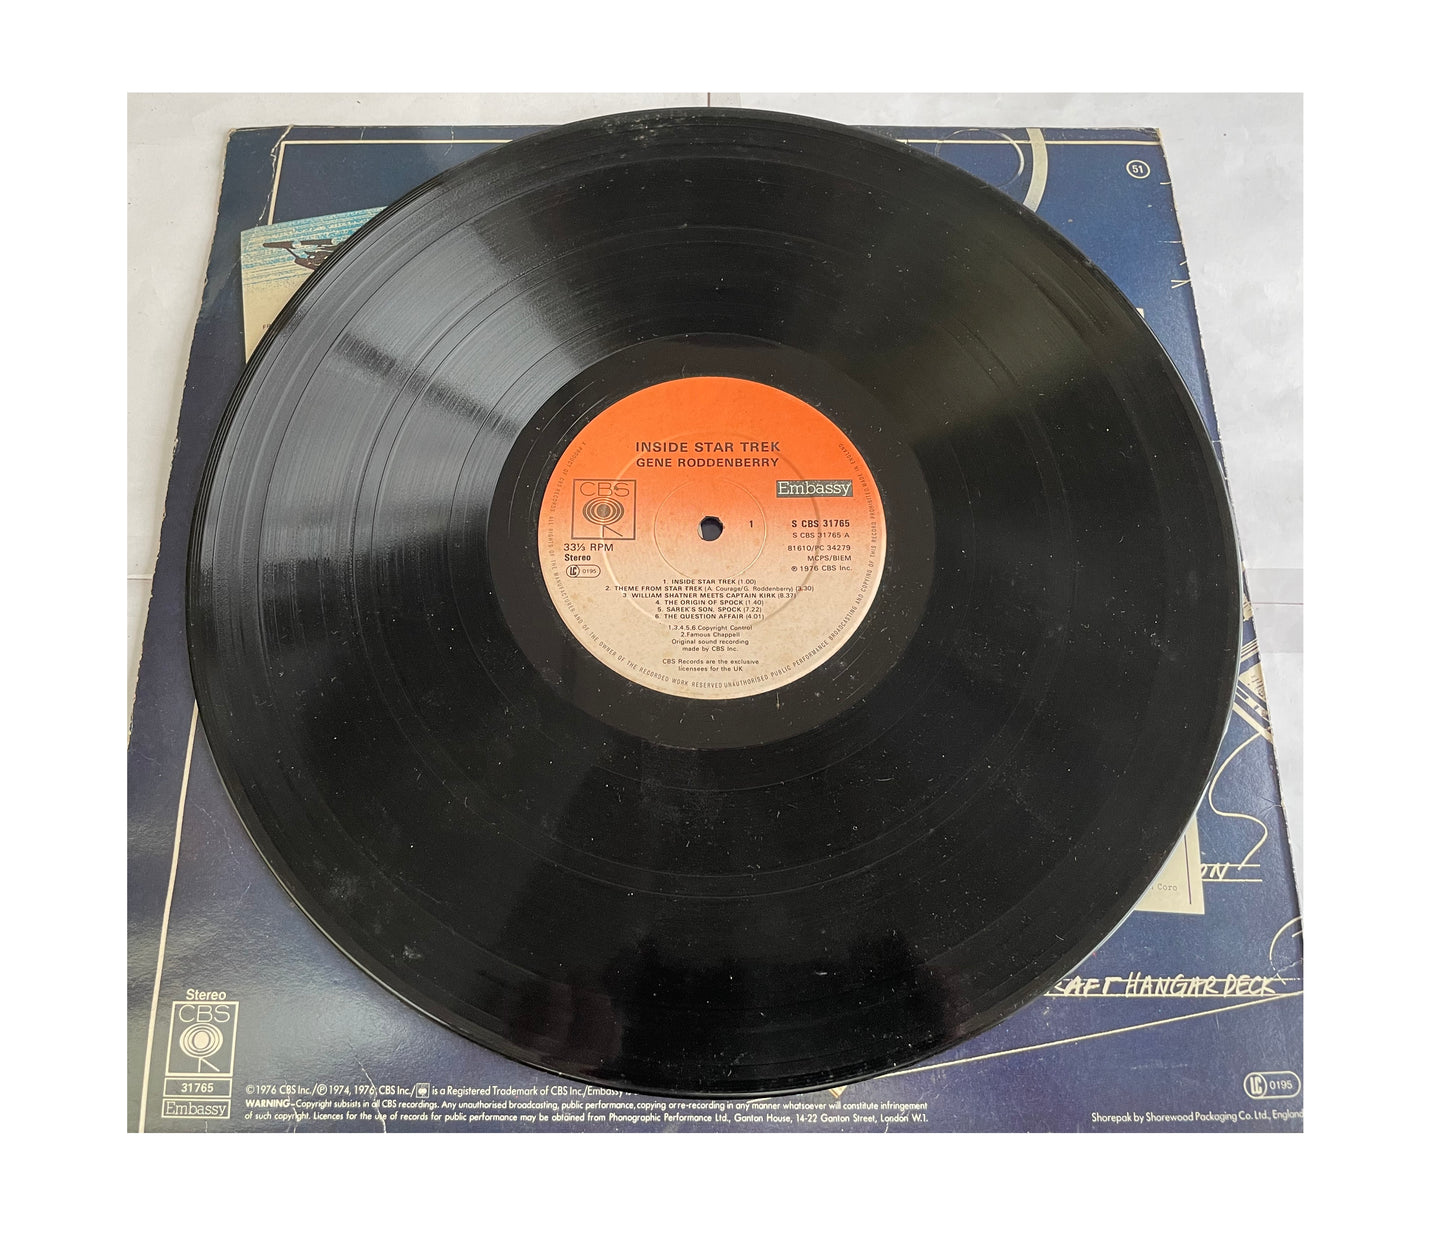 Vintage 1976 Inside Star Trek 12" Vinyl Record Album